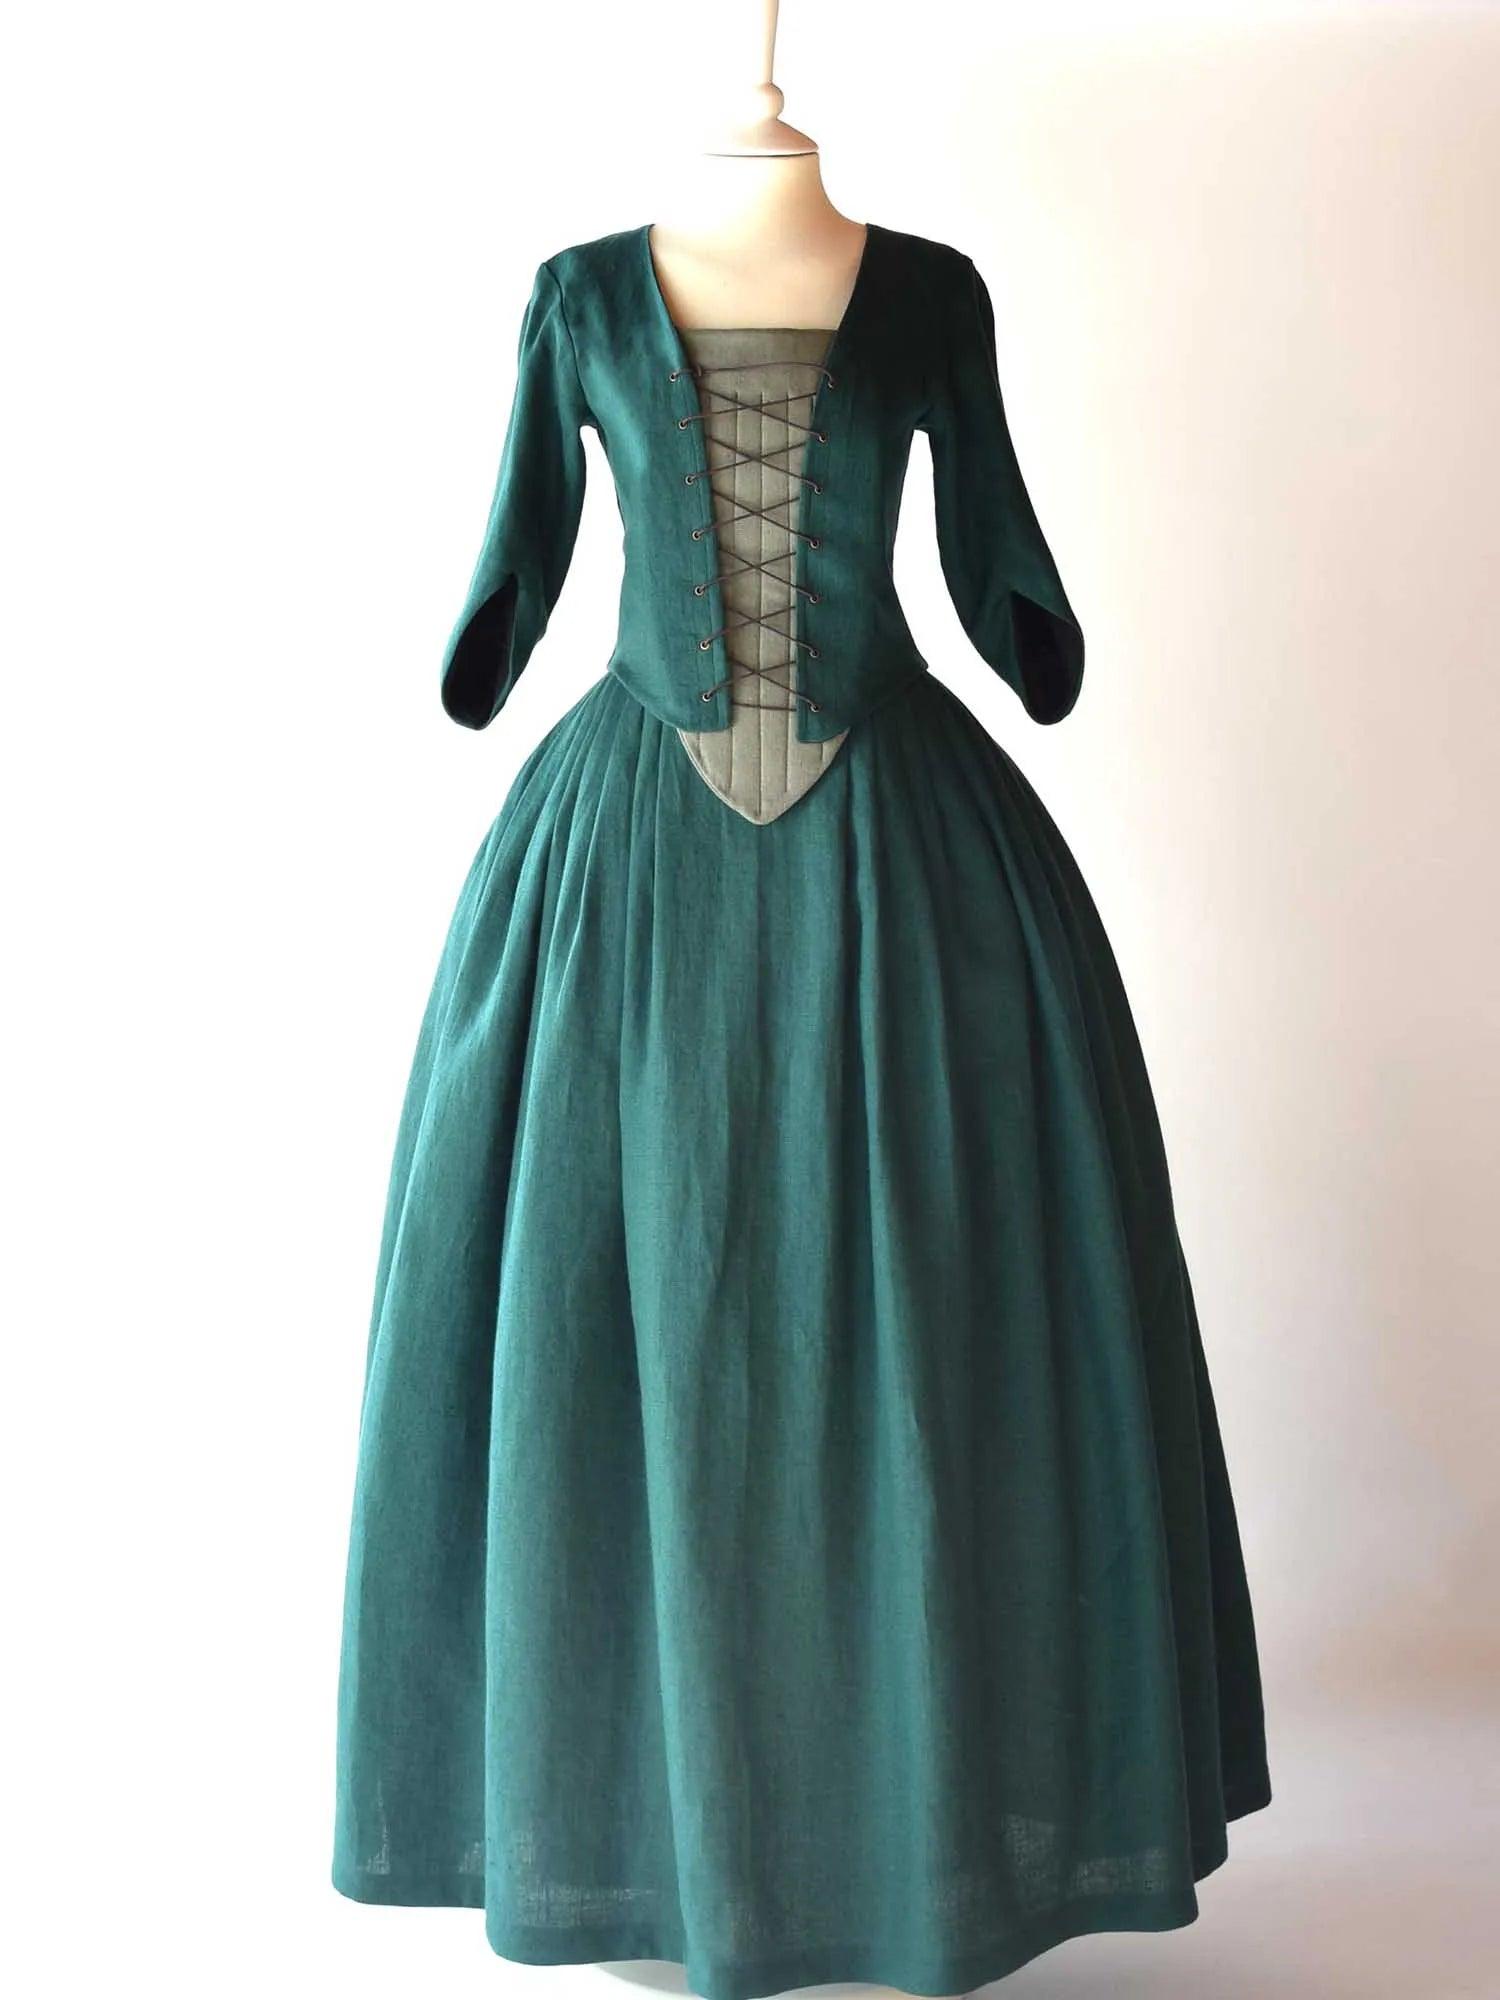 Historical Costume in Dark Green Linen - Atelier Serraspina